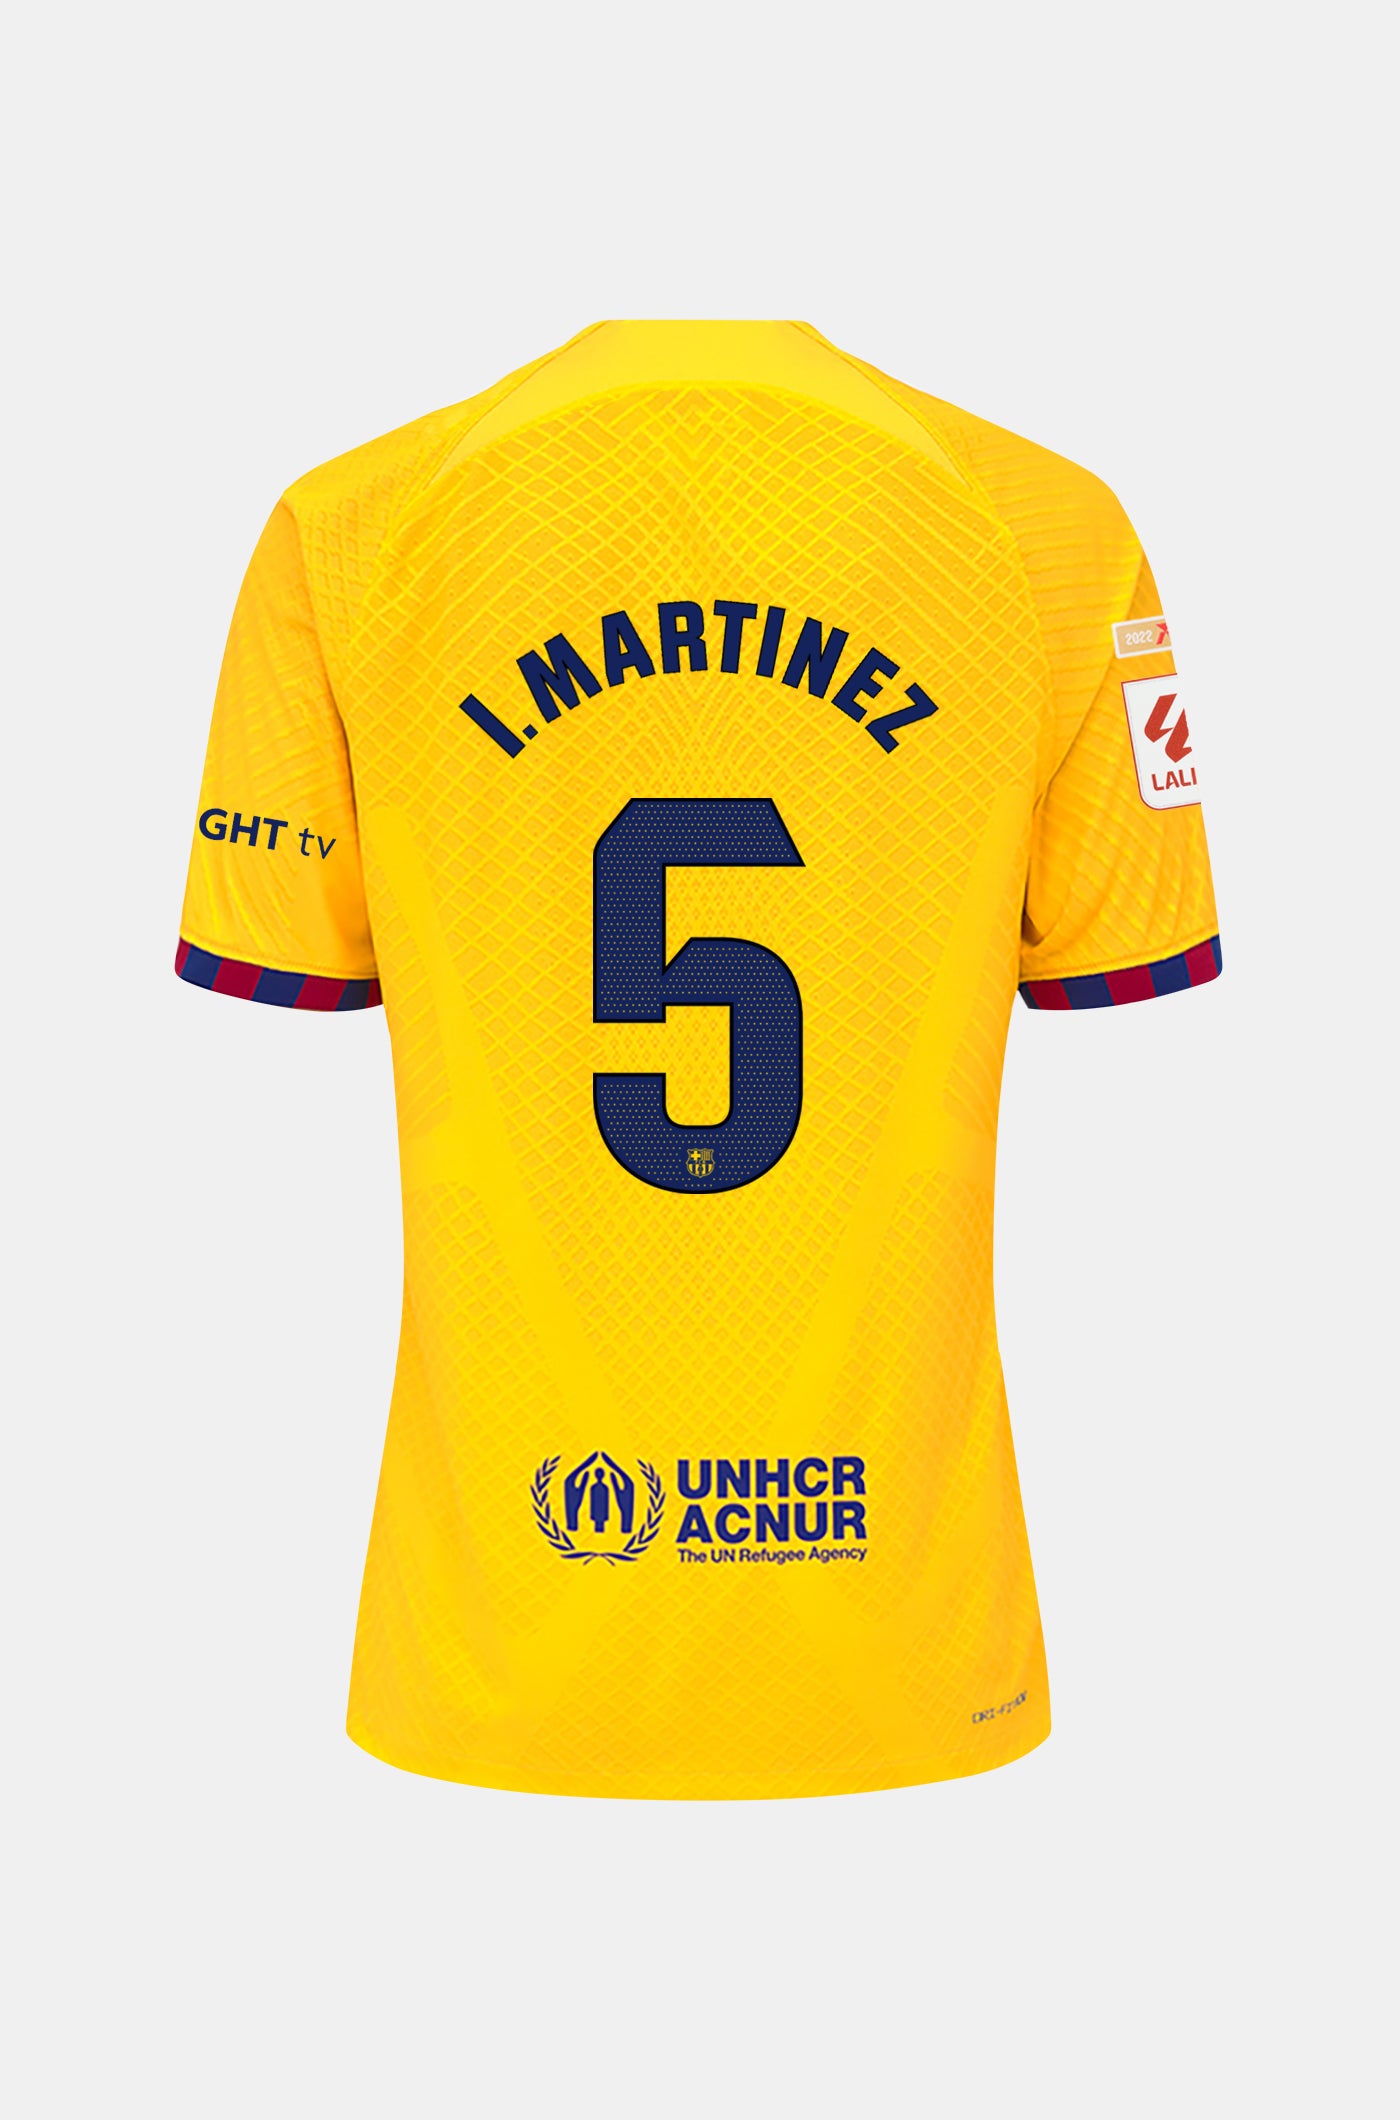 LFP FC Barcelona fourth shirt 23/24 Player’s Edition  - I. MARTÍNEZ